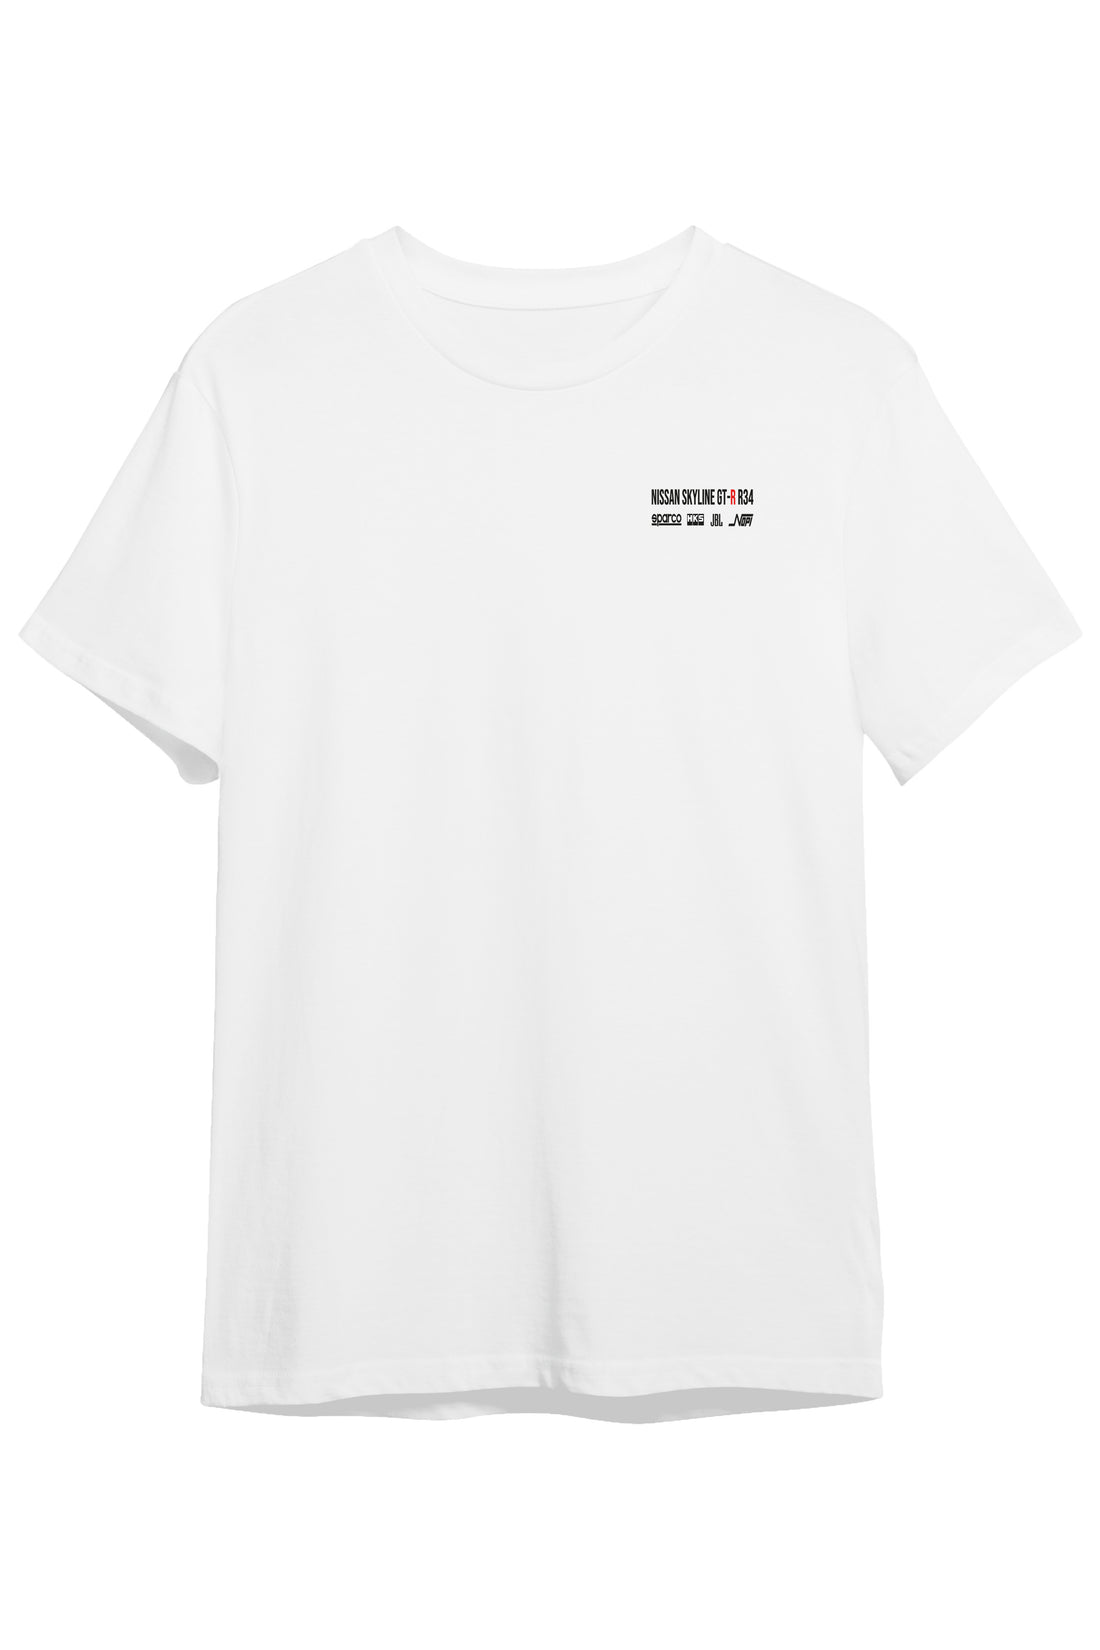 Nissan Skyline Bullet - Regular Tshirt